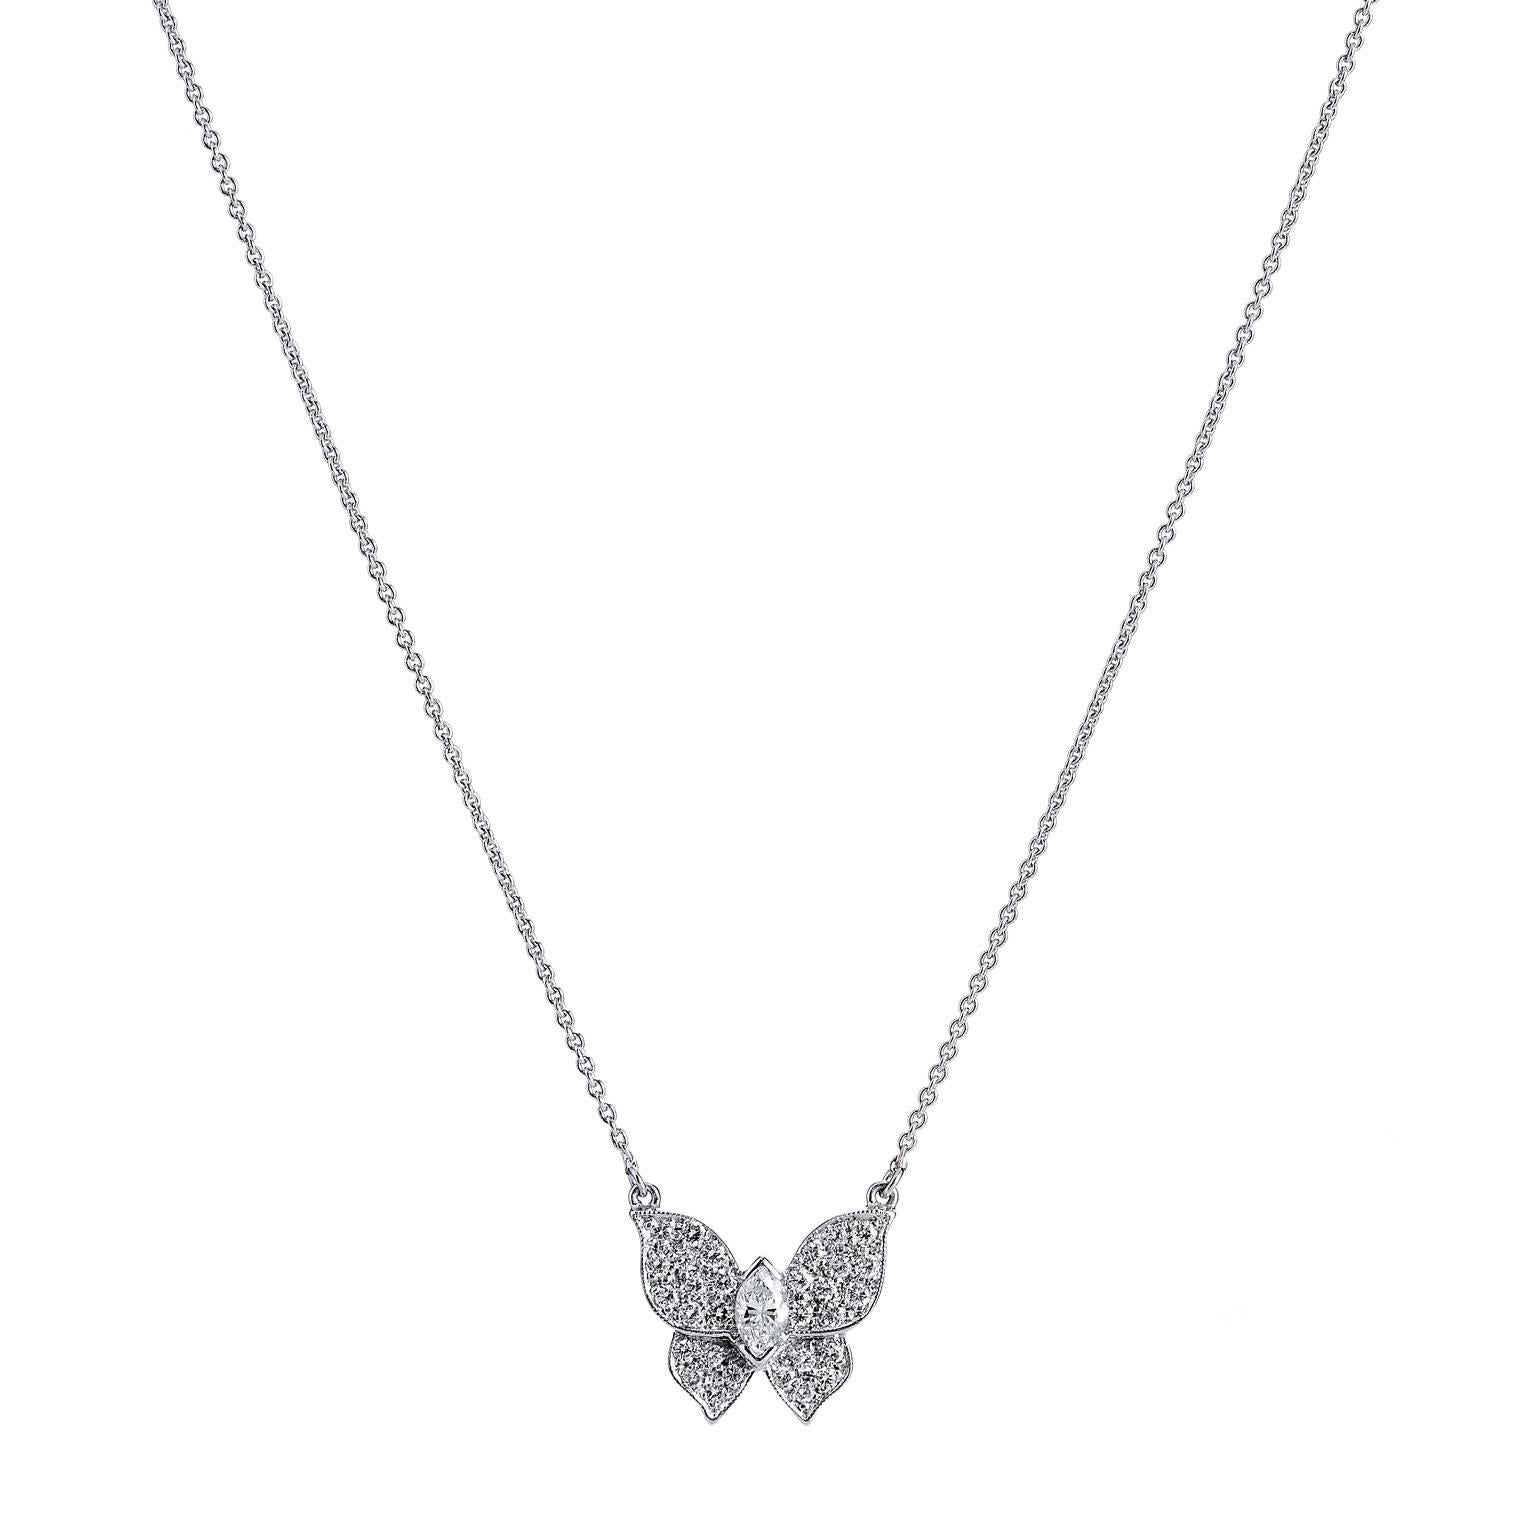 H & H 0.54 Carat Diamond Butterfly Pendant Necklace